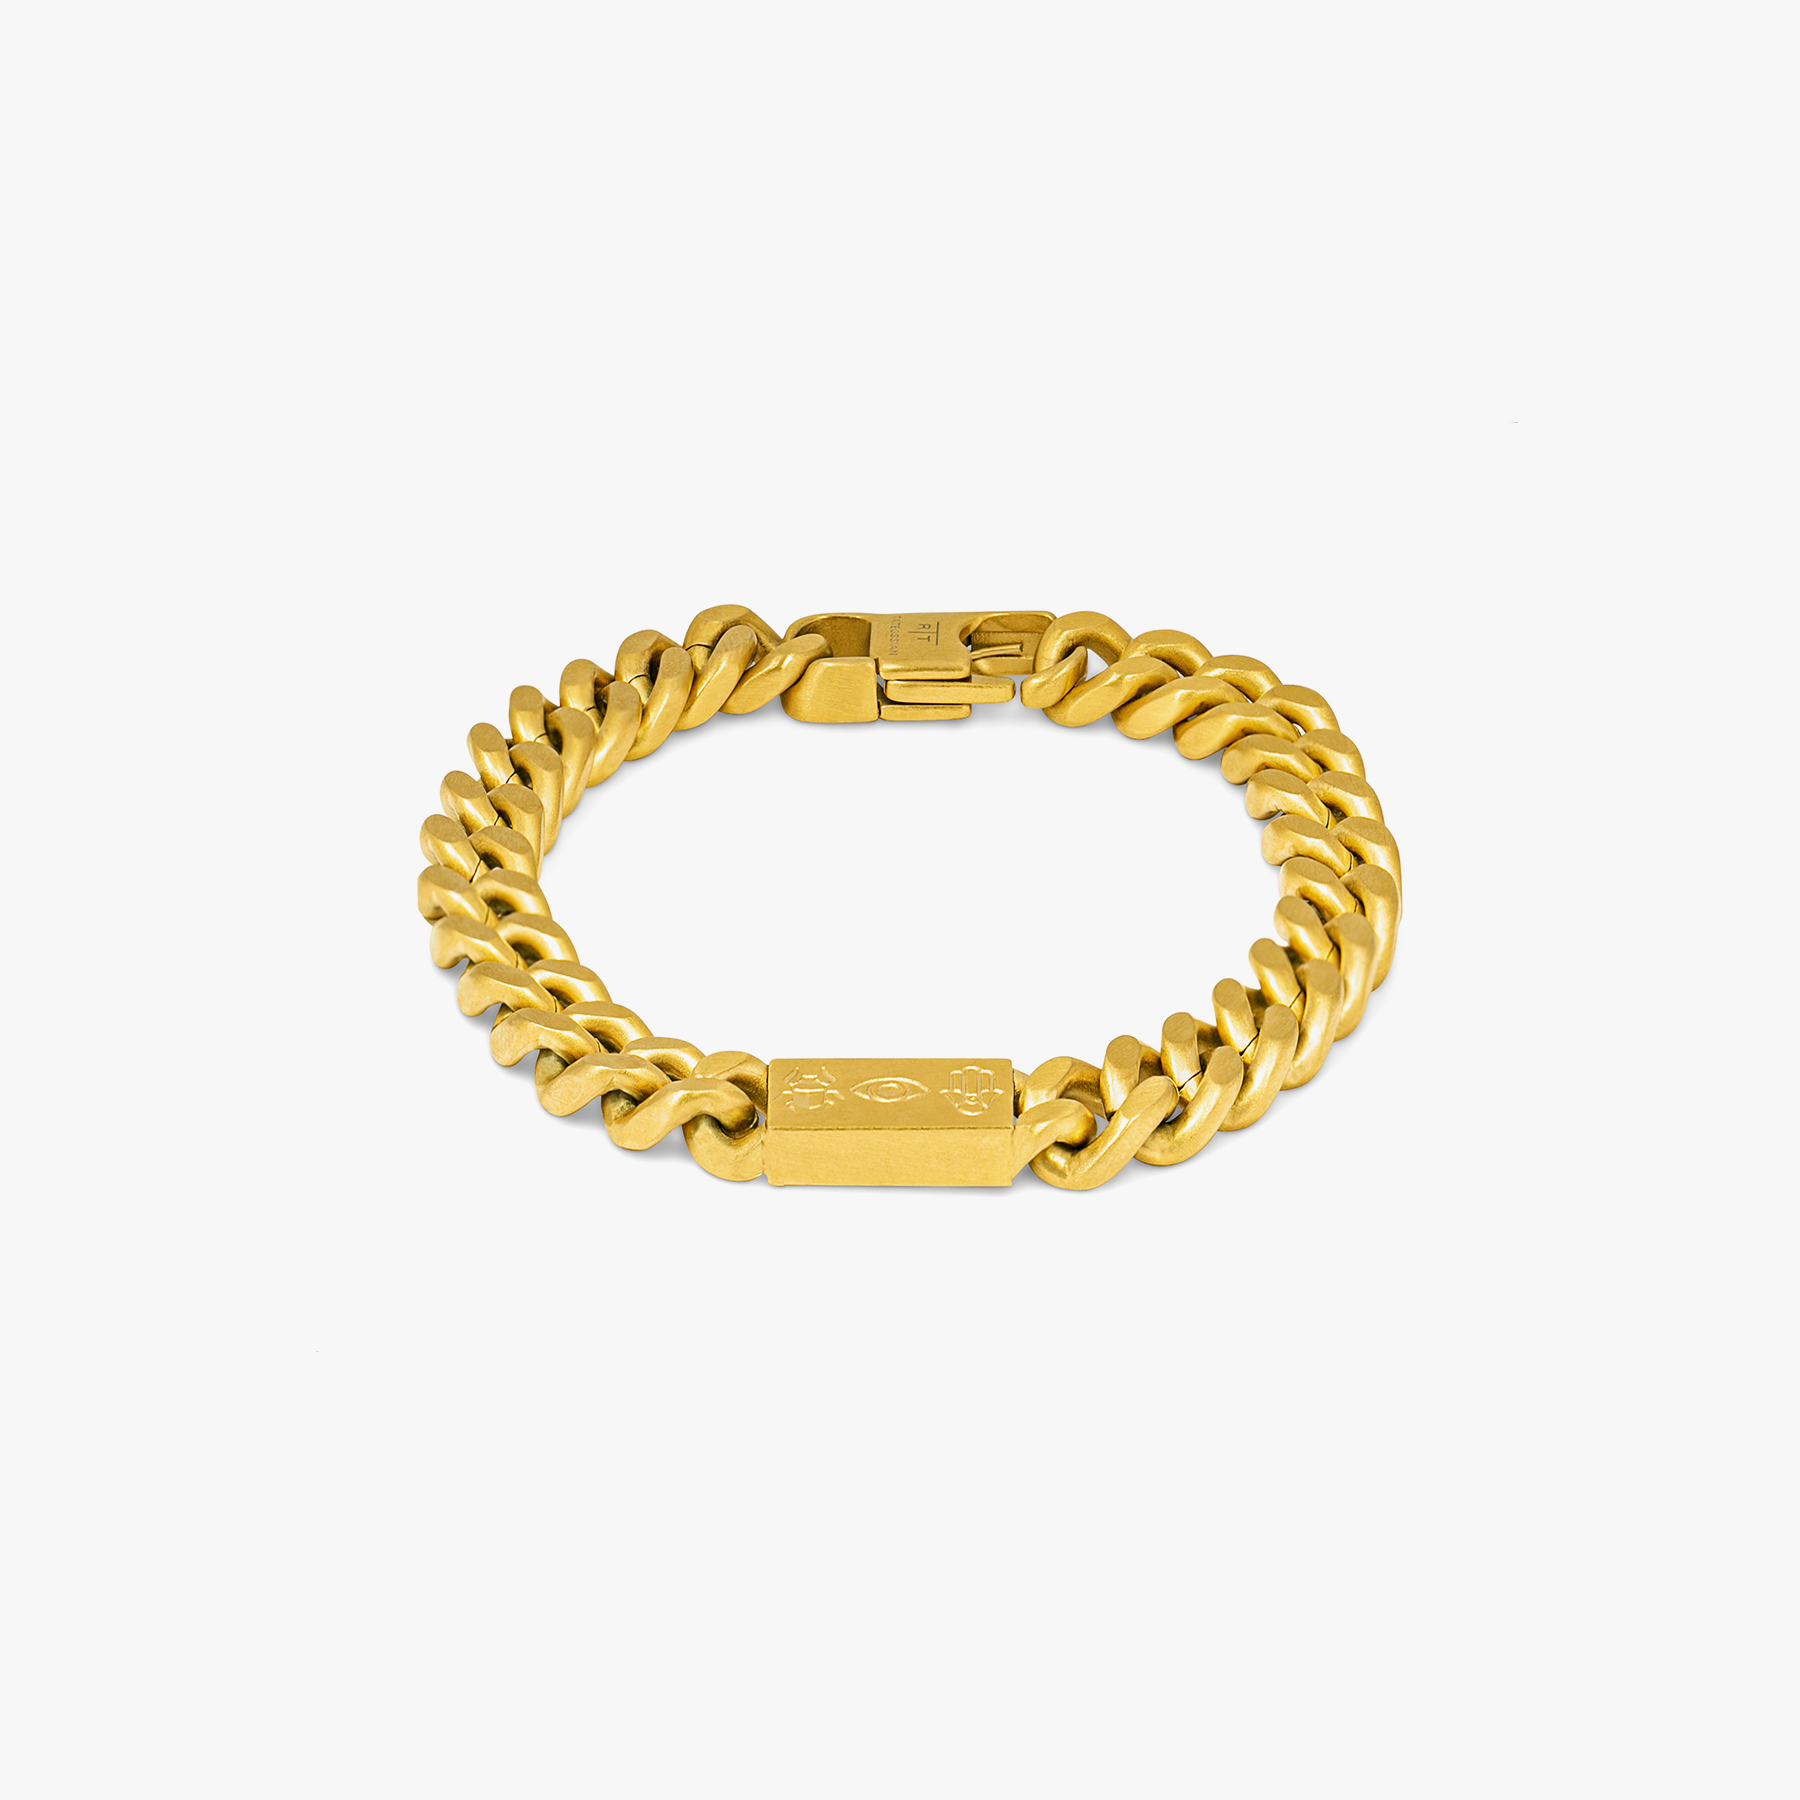 Tateossian Men's Diamond Giza Yellow Gold Clasp Leather Bracelet